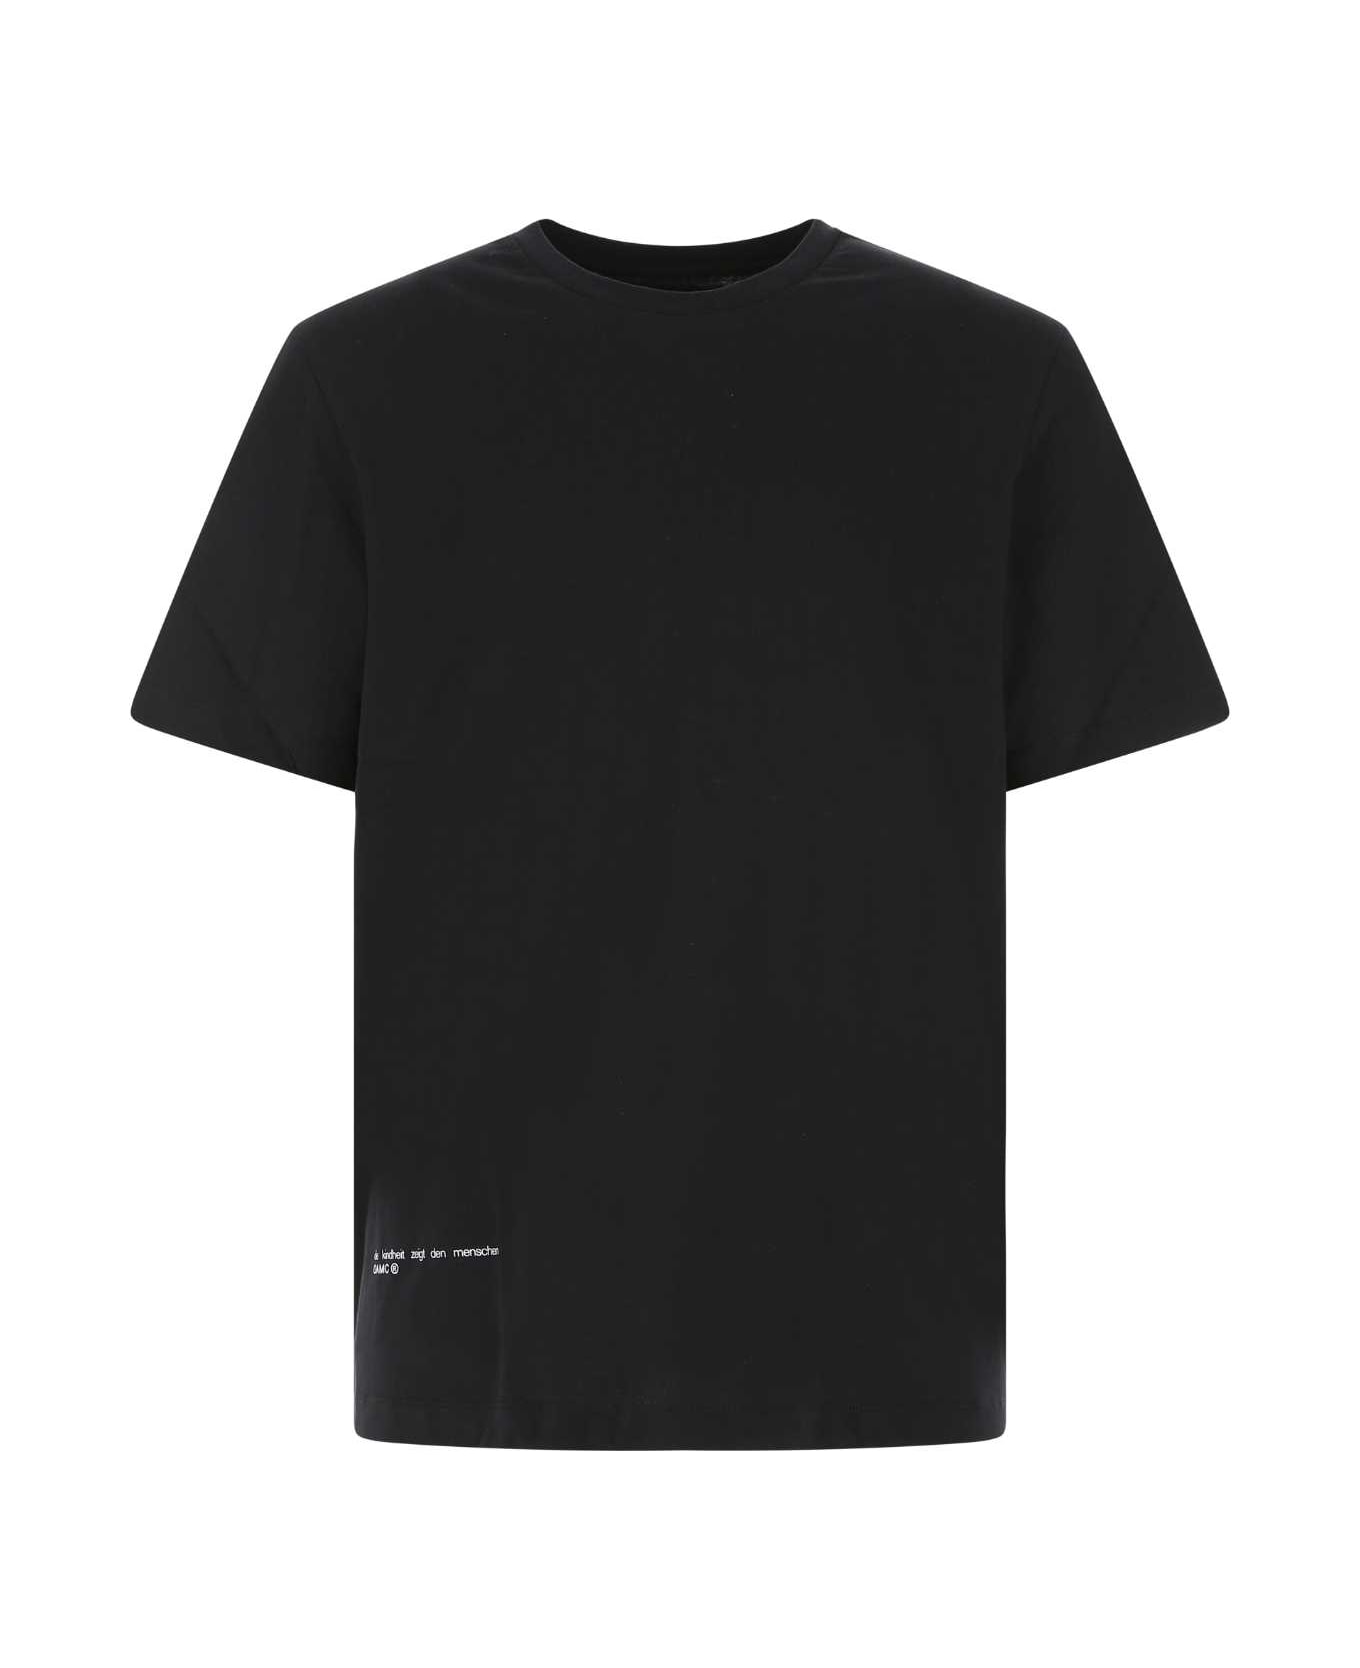 OAMC Black Cotton T-shirt - 001 シャツ